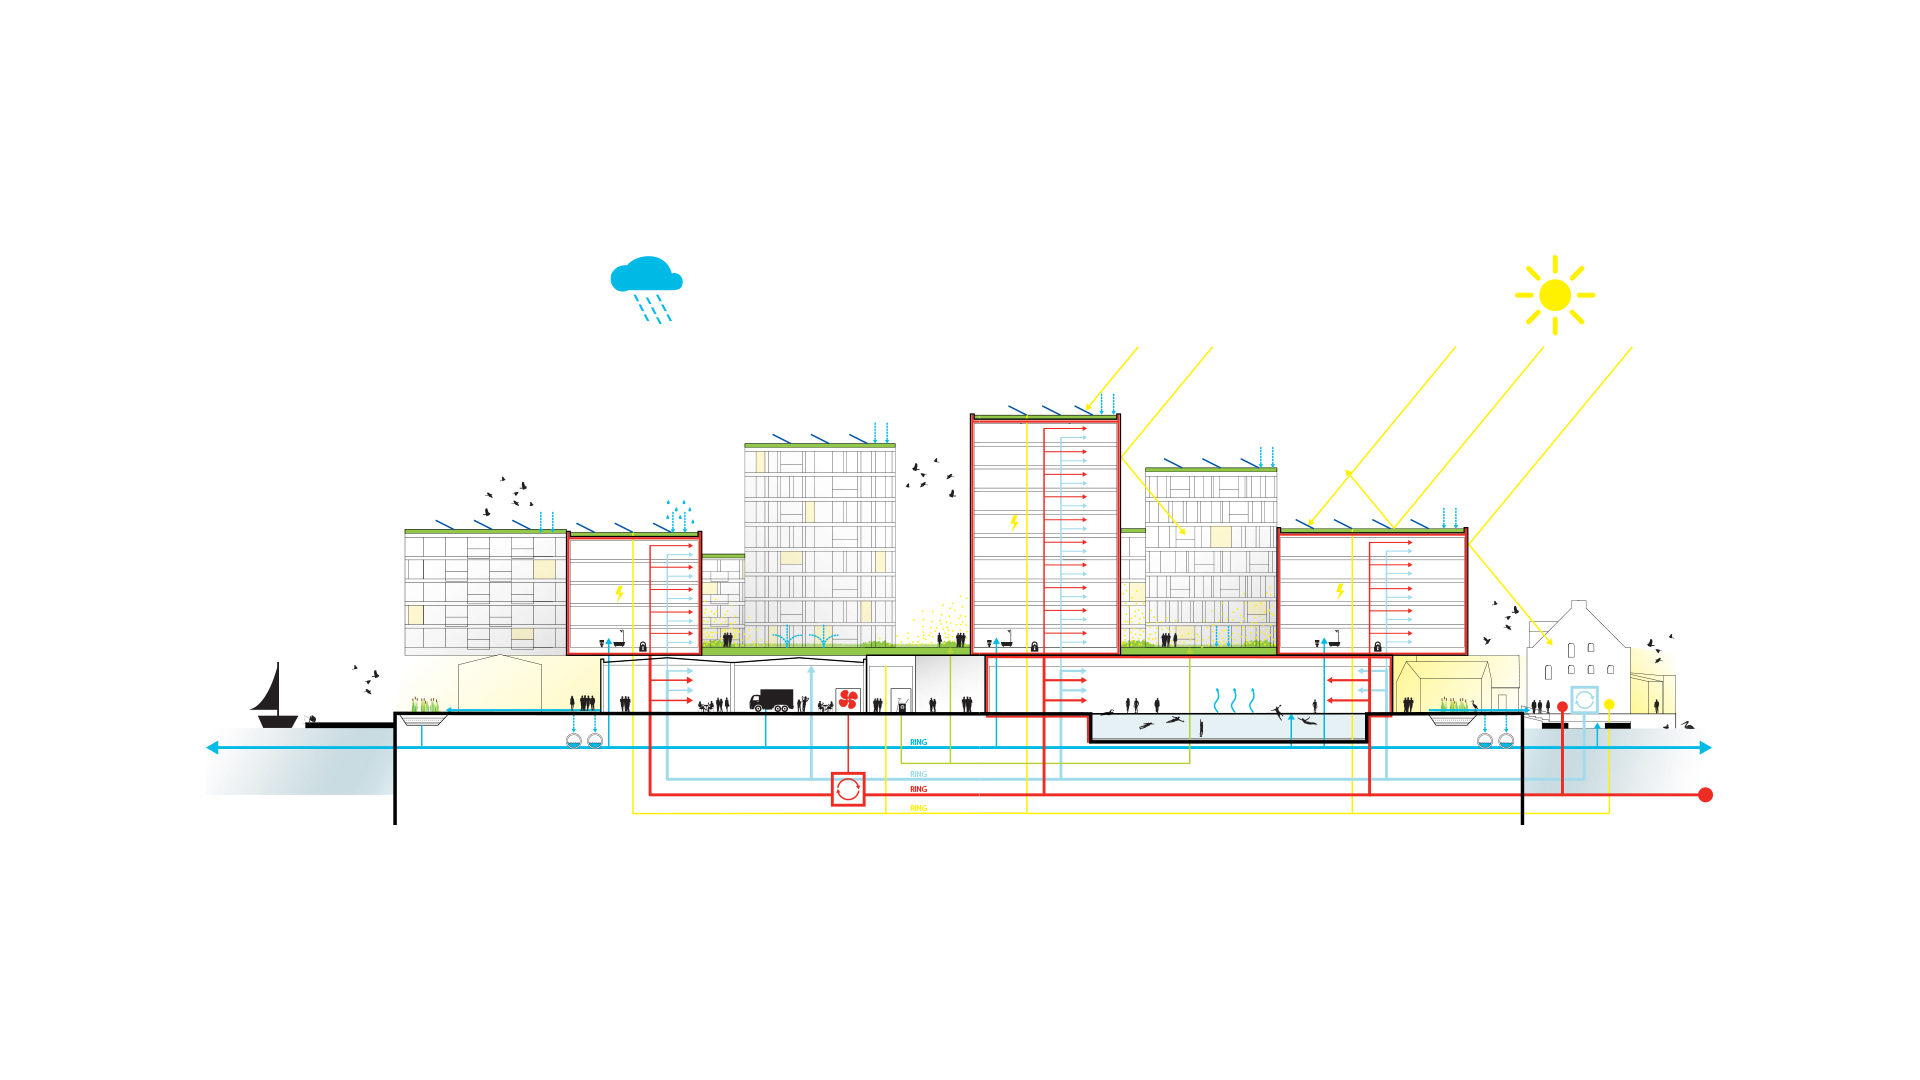 Papirøen – planning and architecture by URBAN POWER